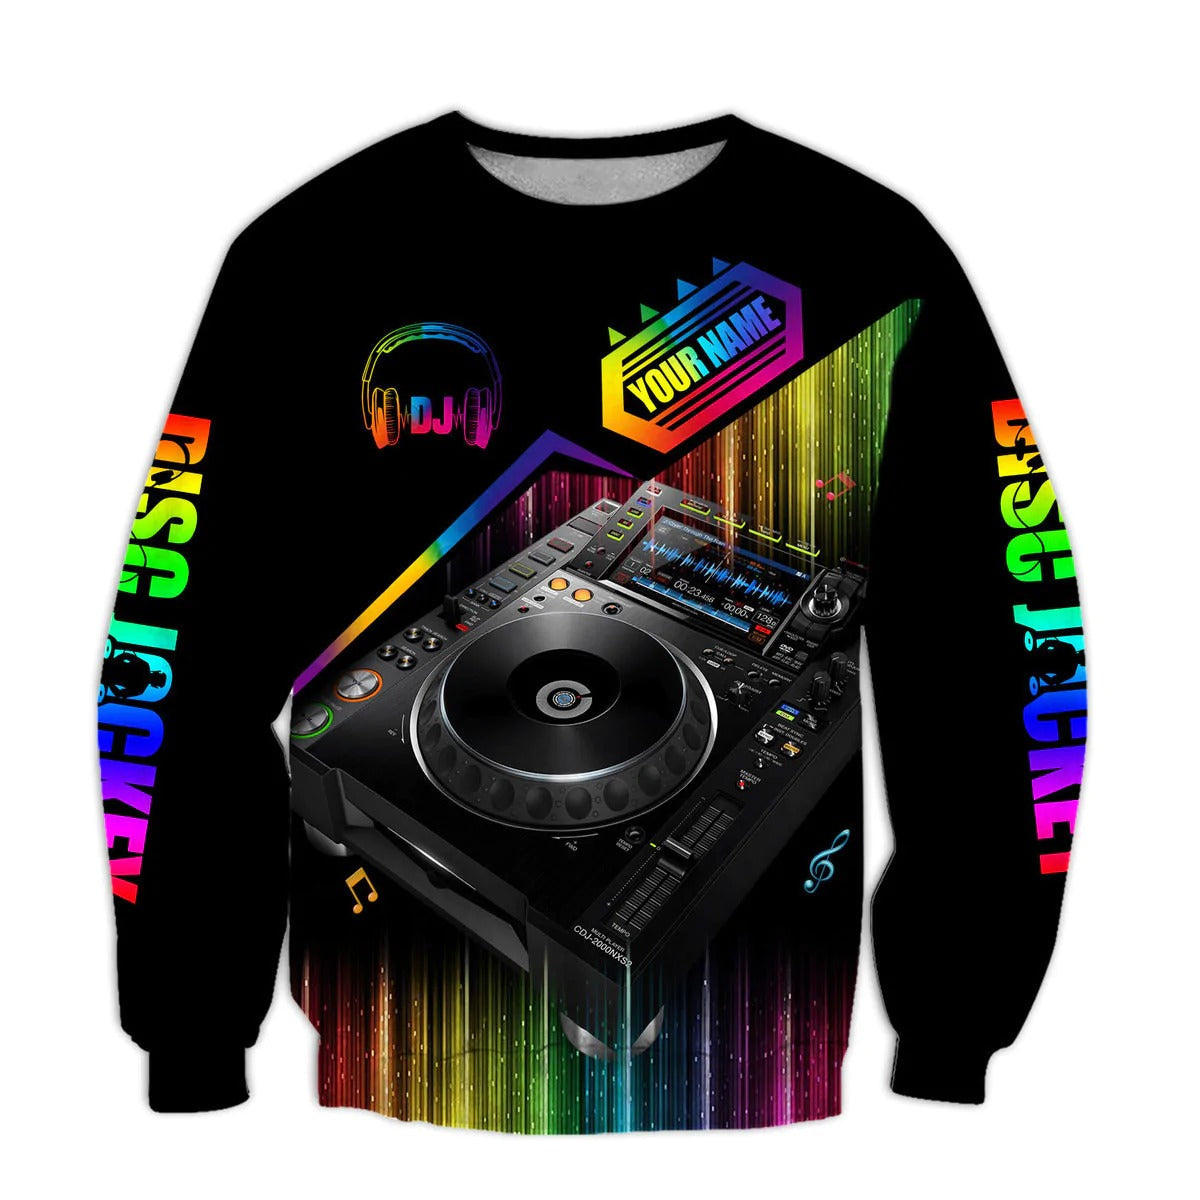 Personalized 3D Colorful DJ Hoodies Men Women/ Disc Jockey Shirt/ EDM Party Uniform/ Gift For A DJ